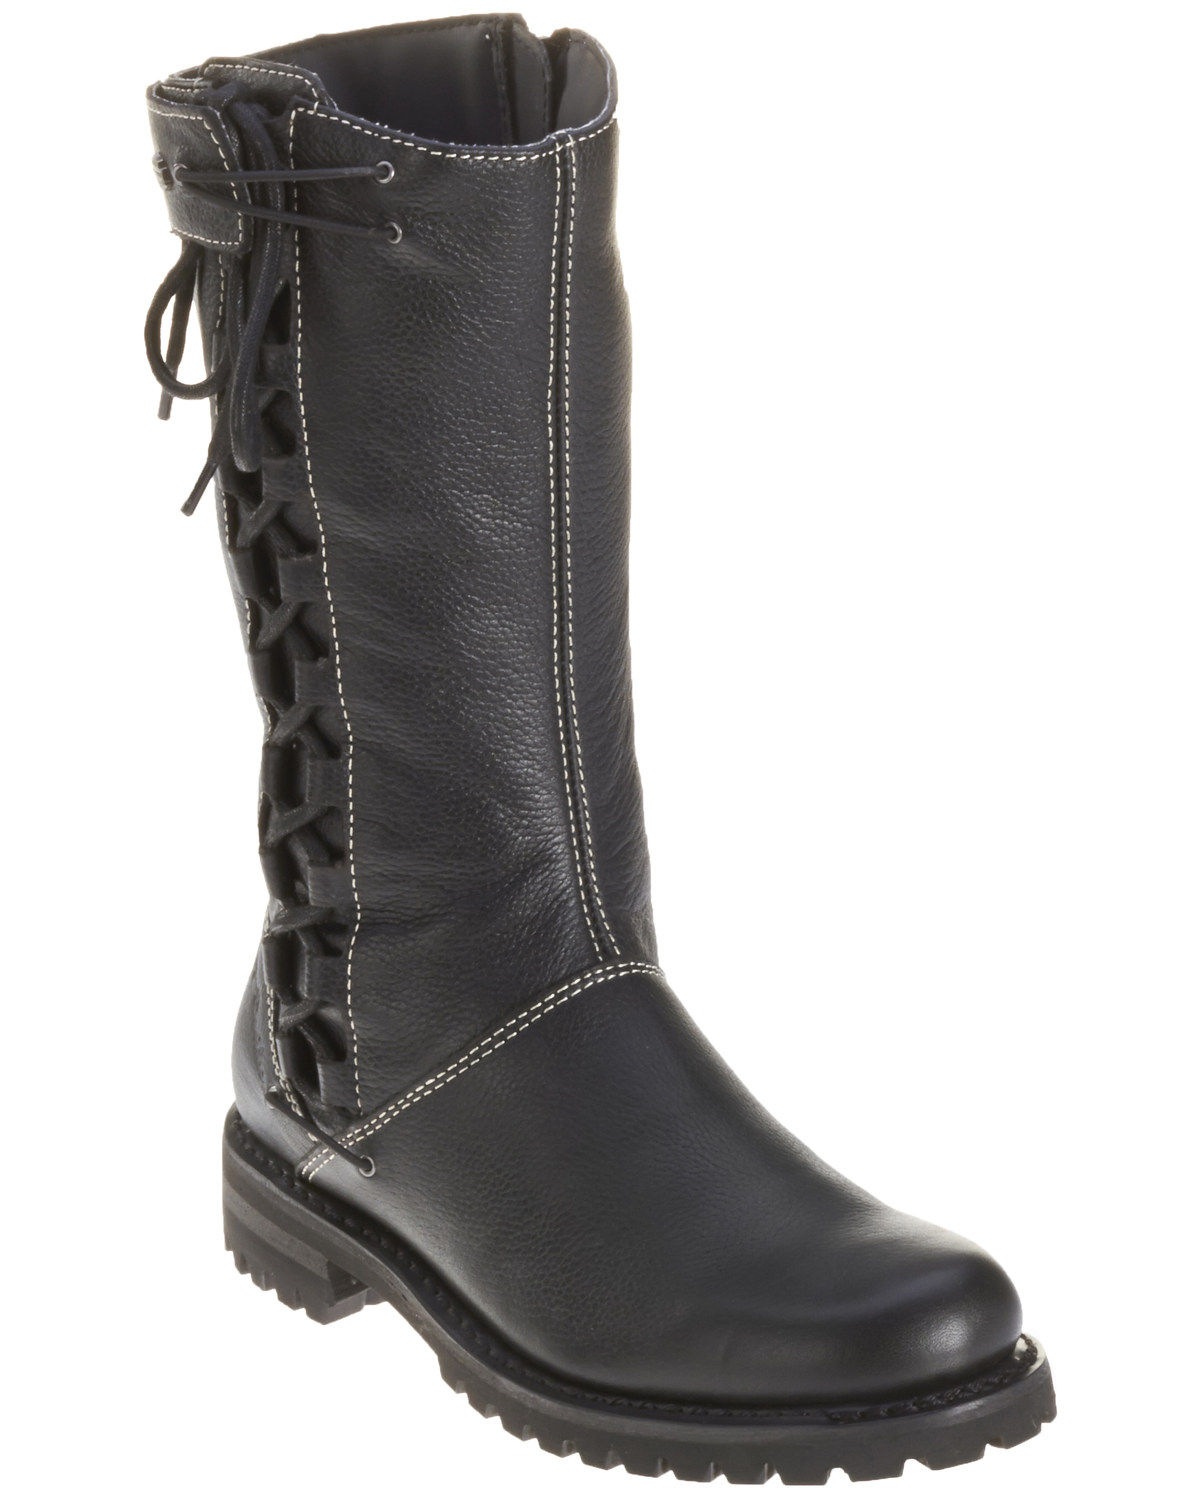 female harley davidson boots